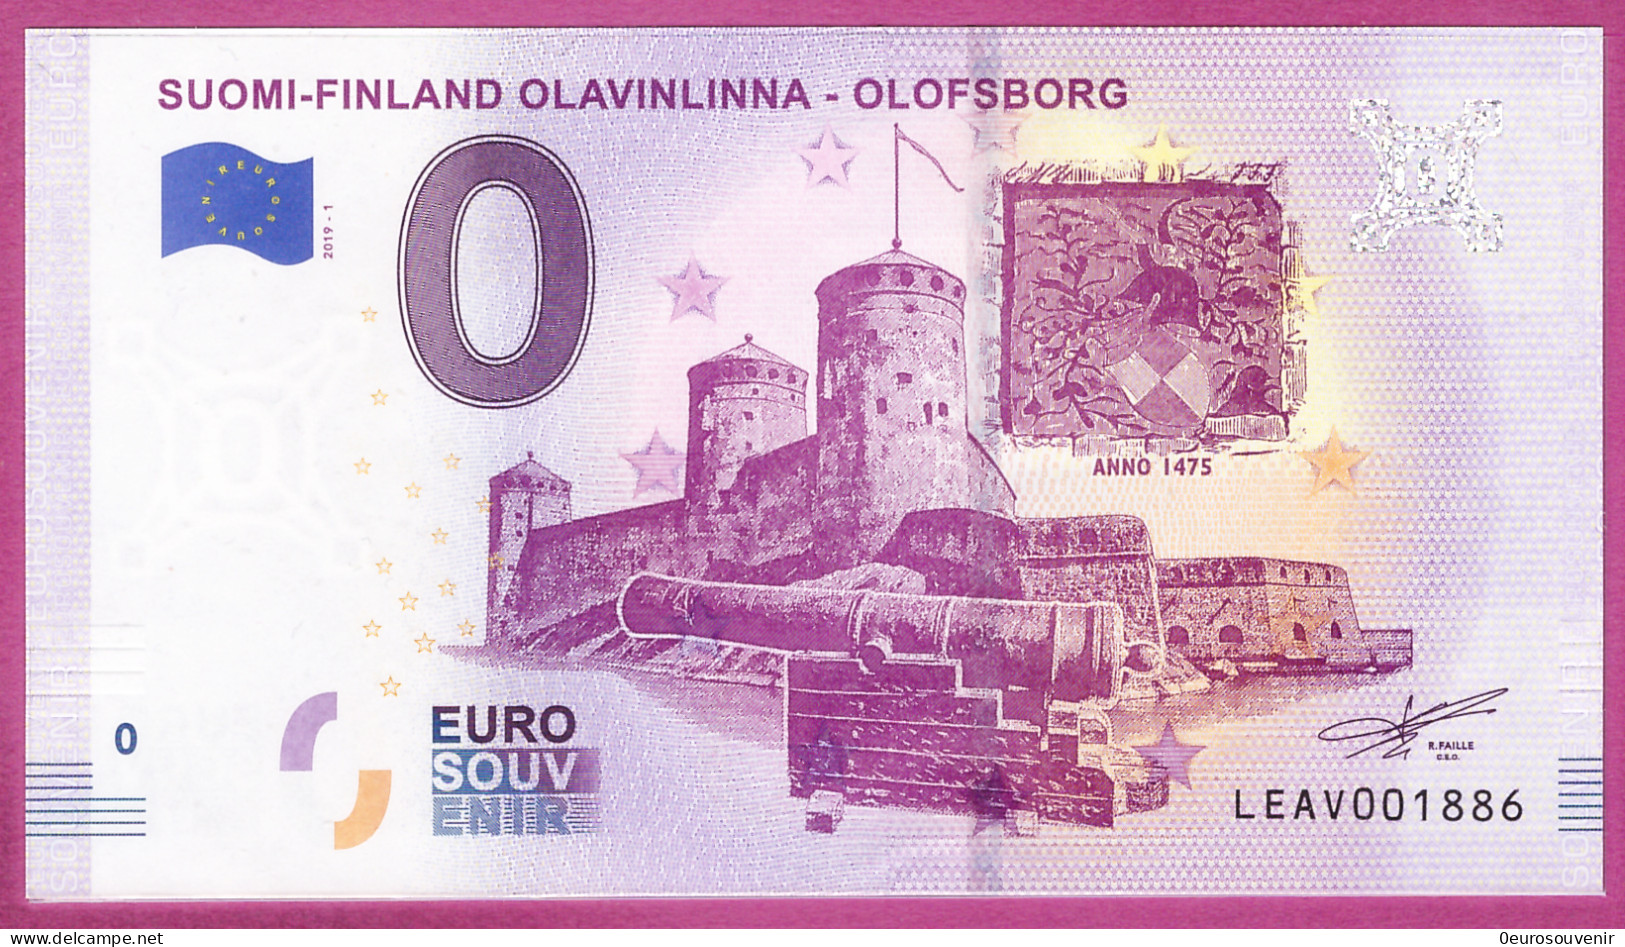 0-Euro LEAV 2019-1 SUOMI-FINLAND OLAVINLINNA - OLOFSBORG - Privatentwürfe